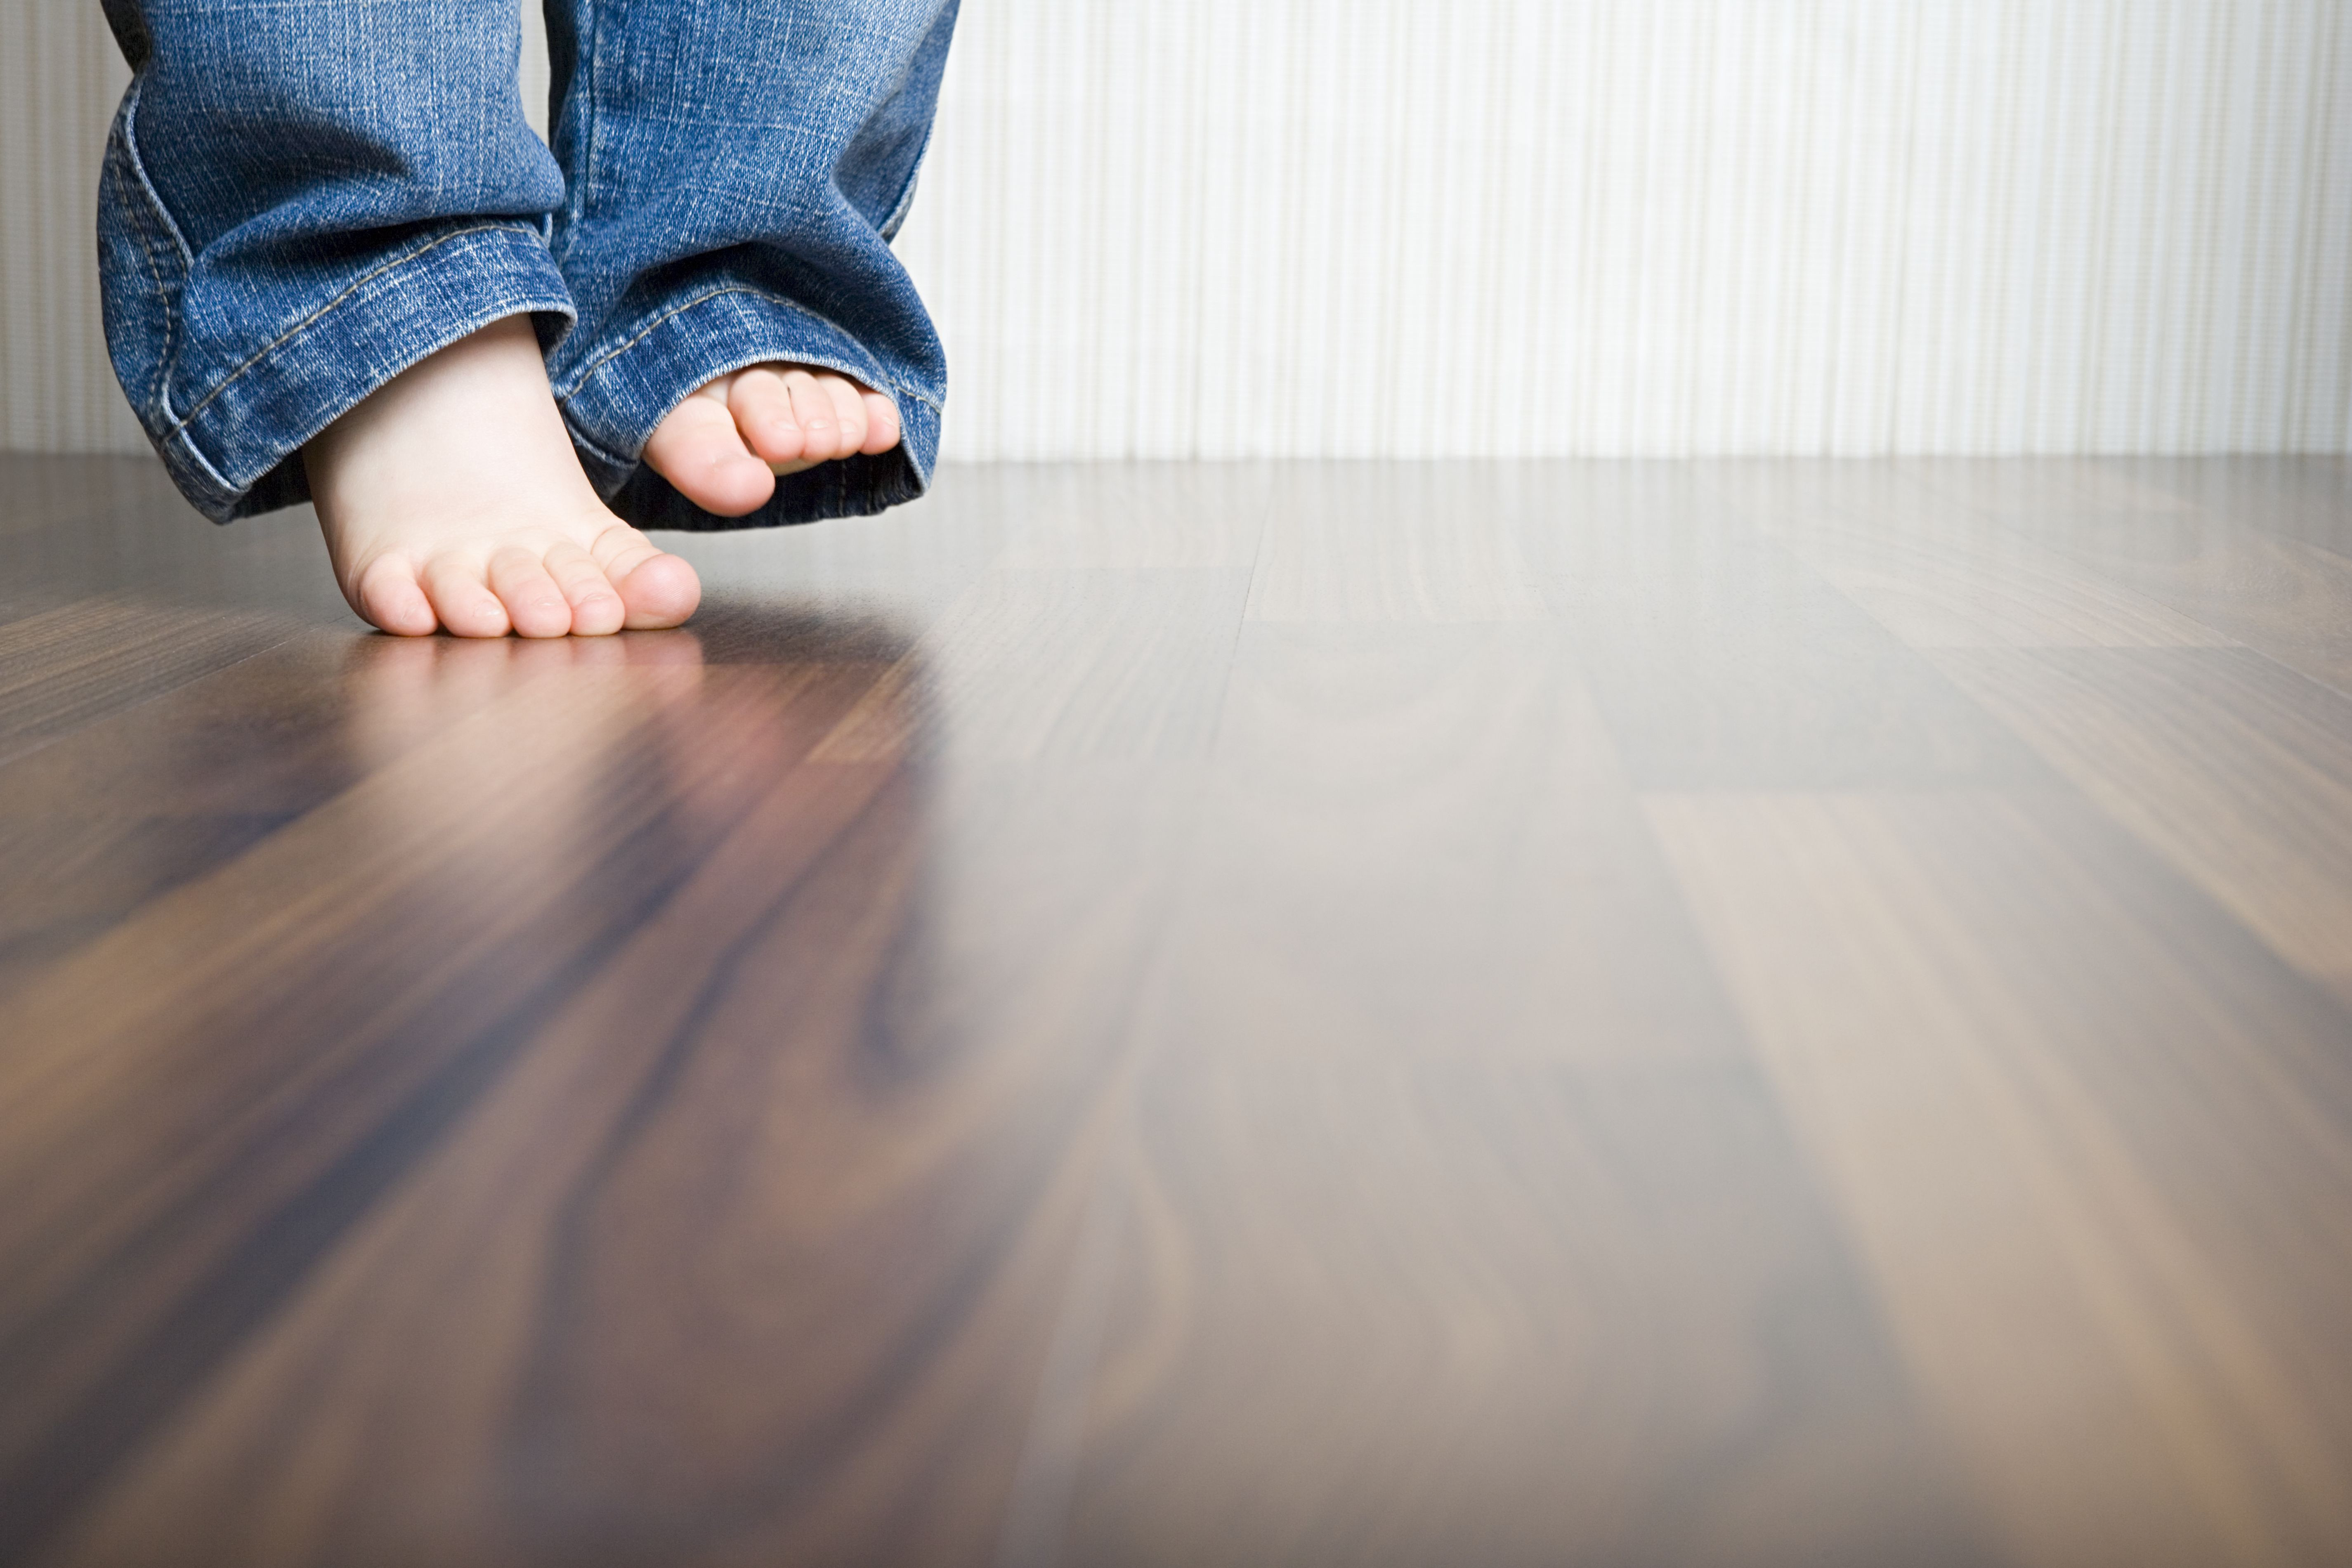 hardwood flooring vs laminate flooring cost of how to clean hardwood floors best way to clean wood flooring pertaining to 1512149908 gettyimages 75403973